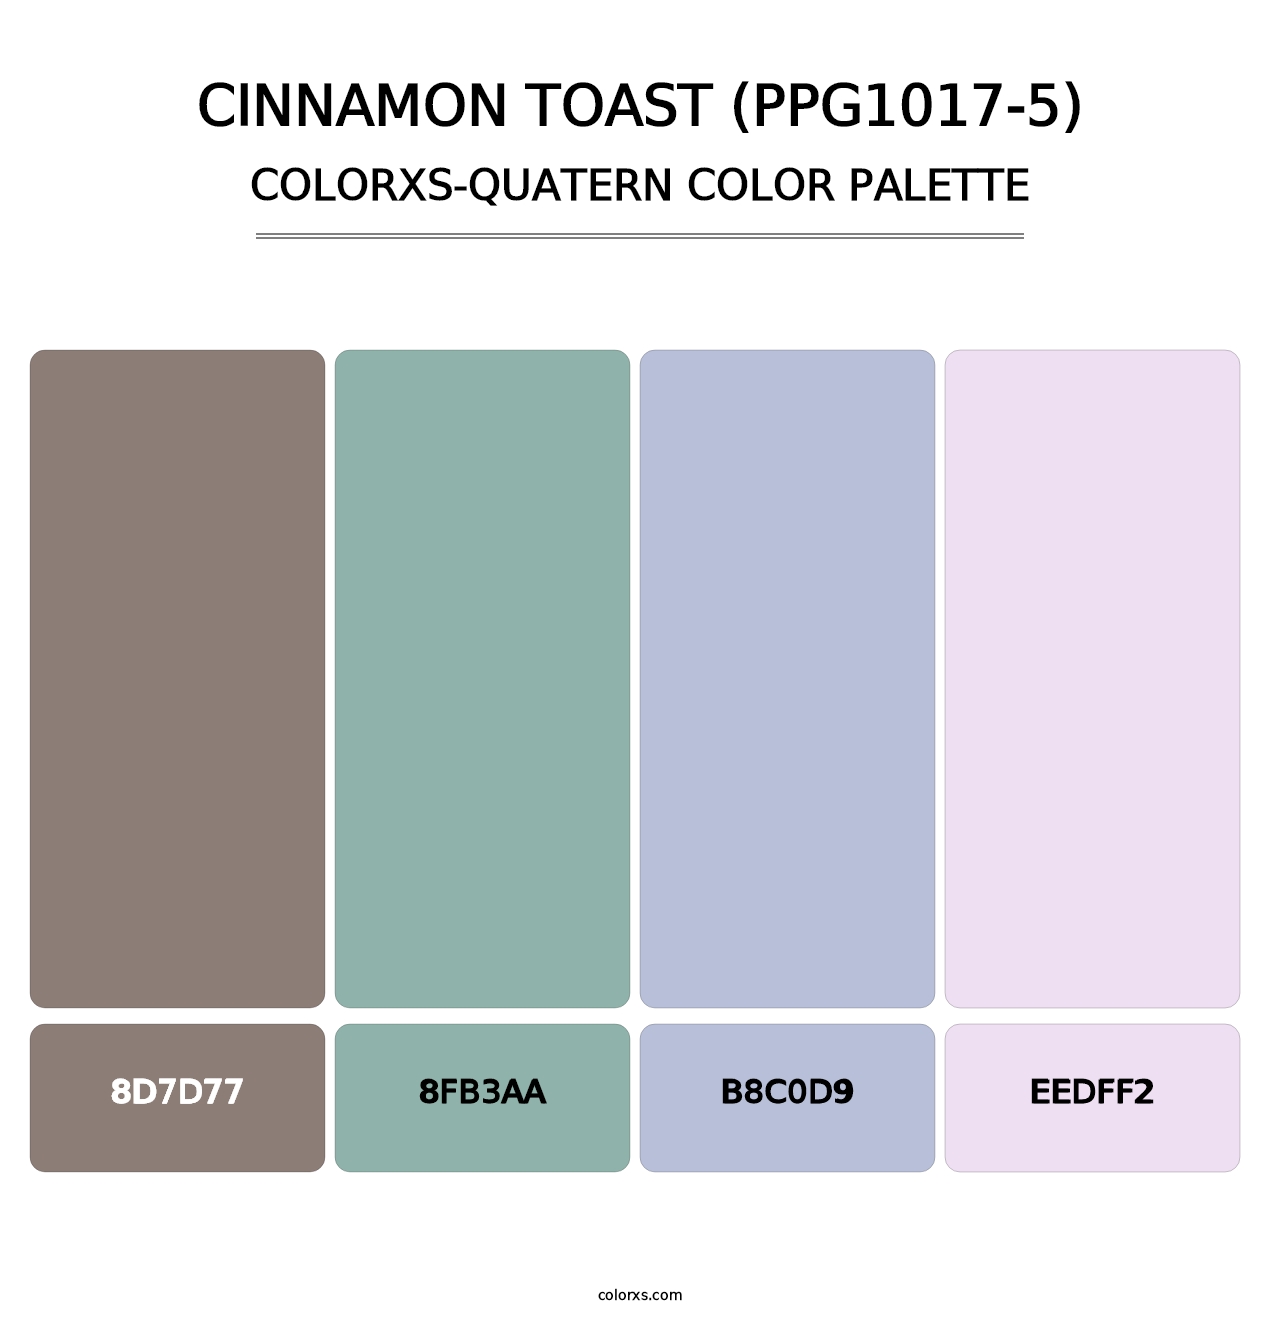 Cinnamon Toast (PPG1017-5) - Colorxs Quatern Palette